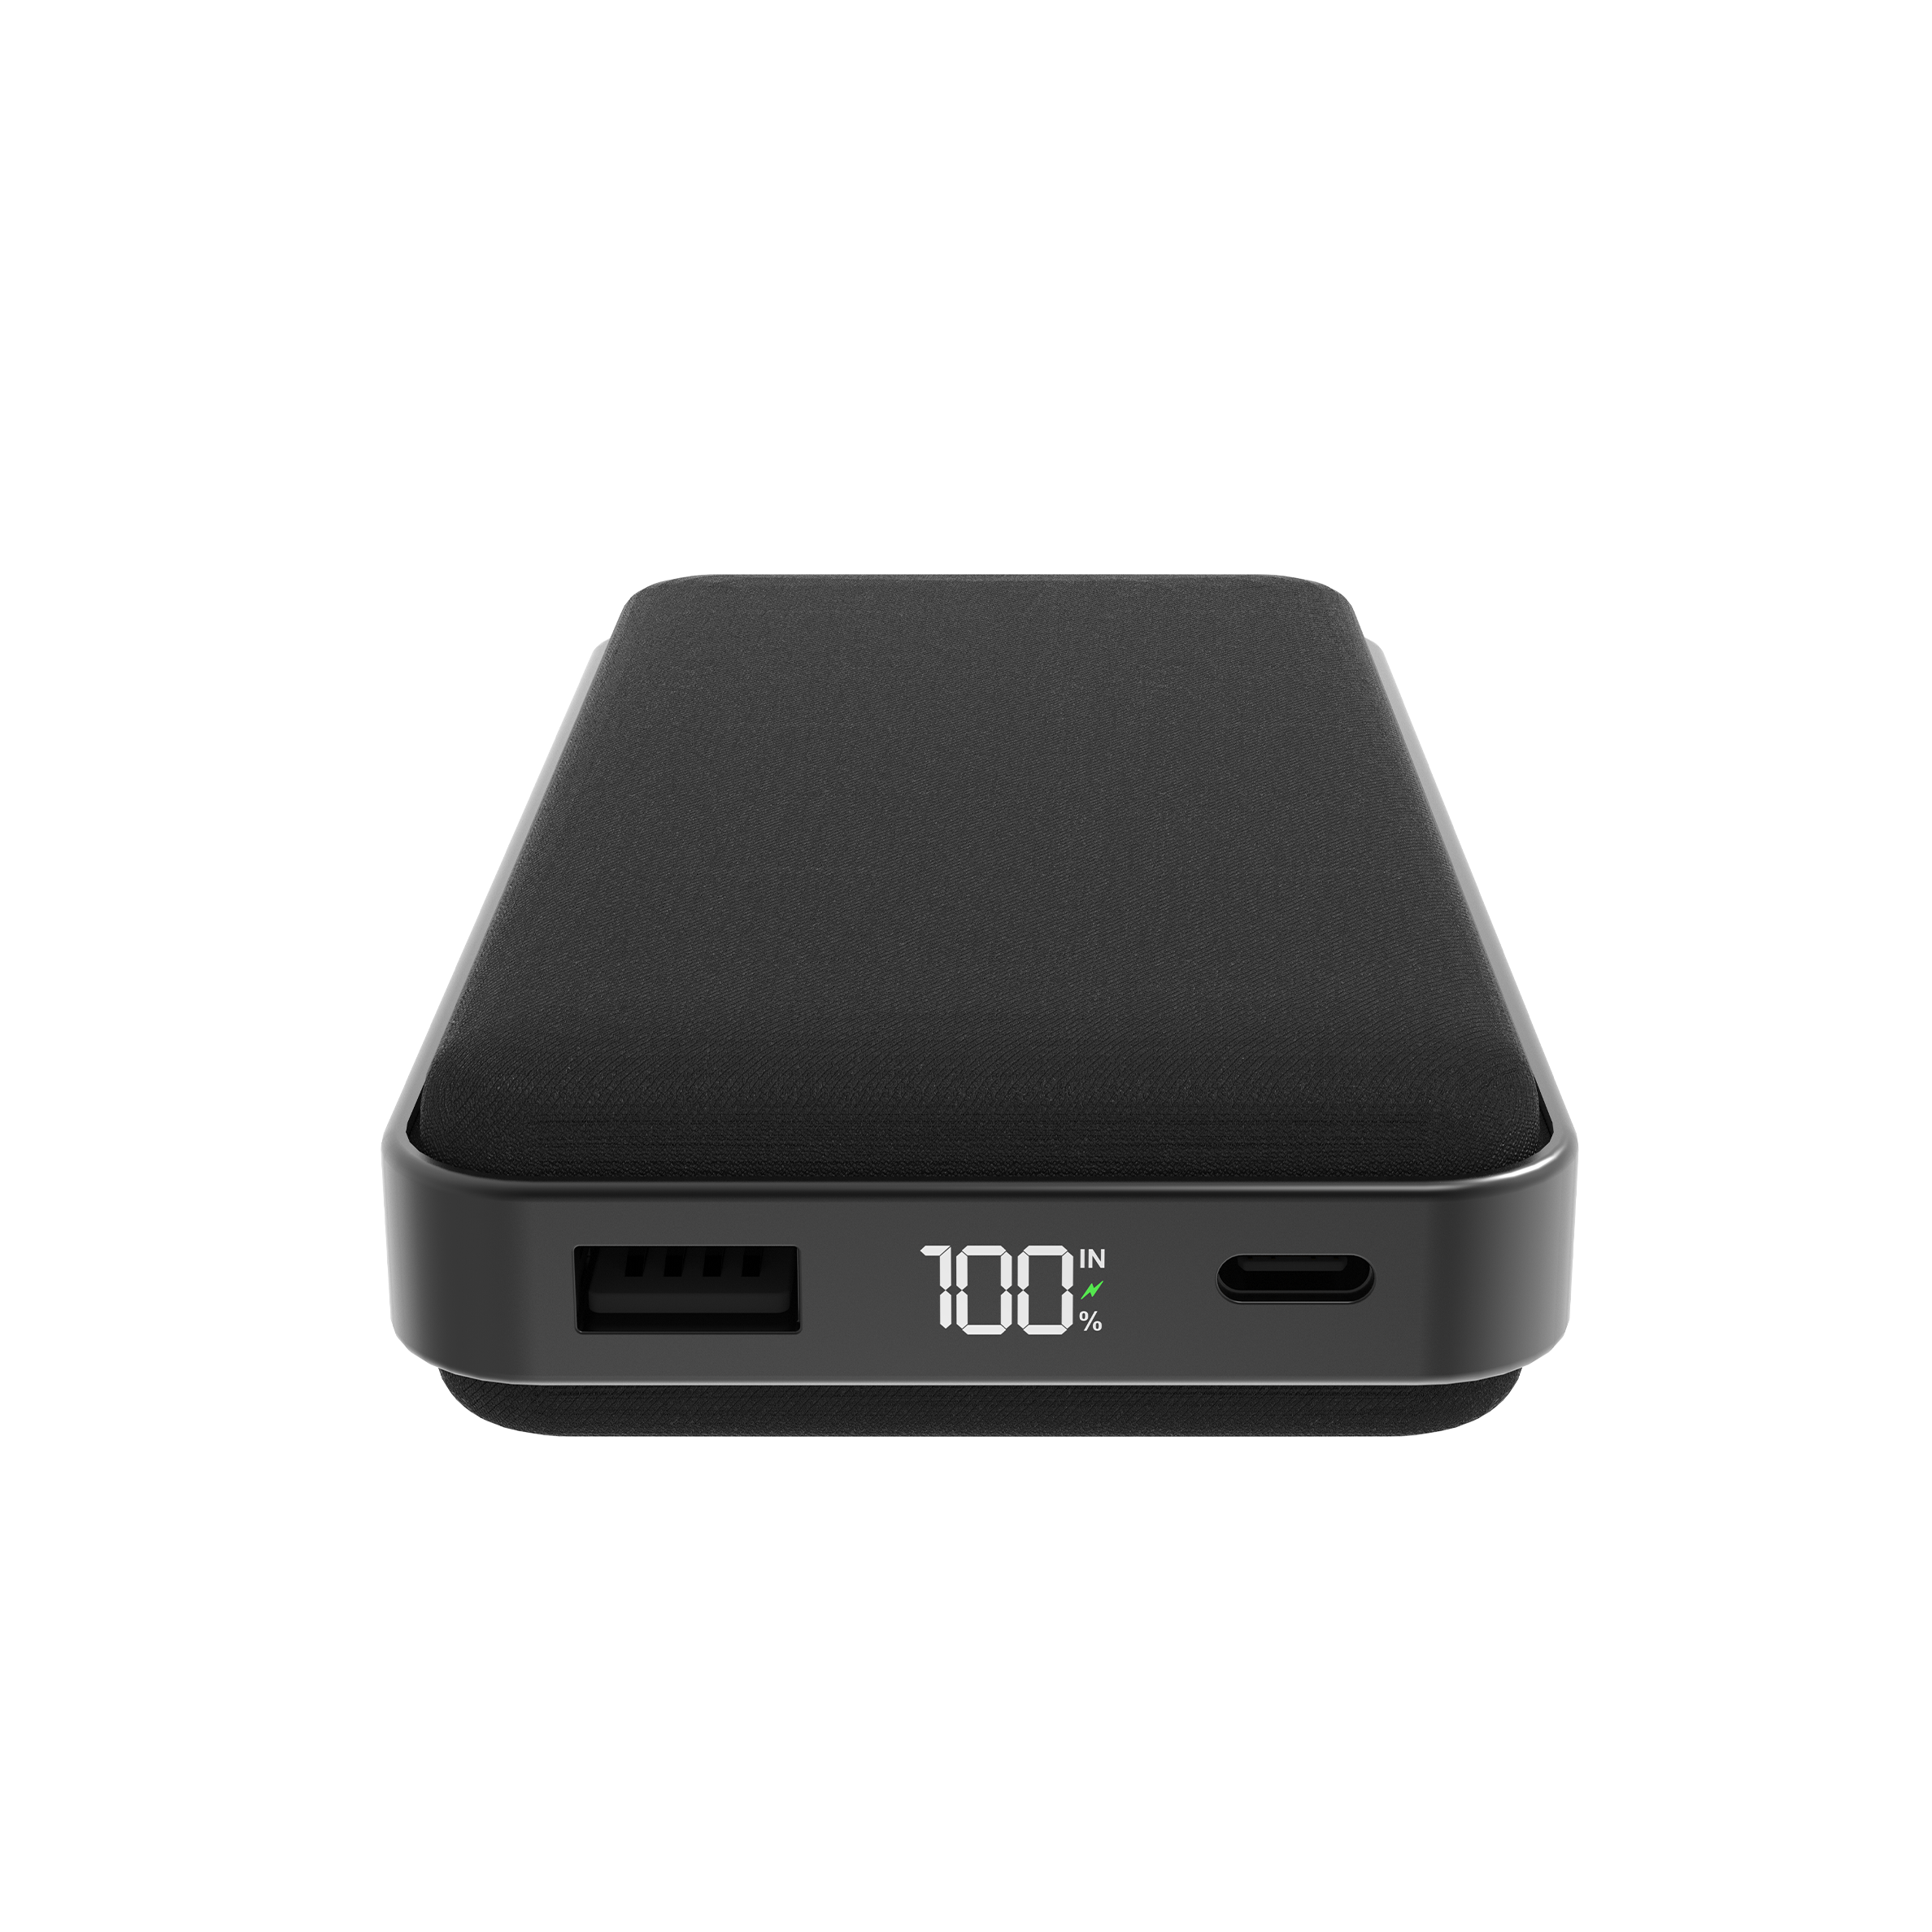 Cygnett Exocharge 118W Laptop Power Bank USB-C -19,200 mAh